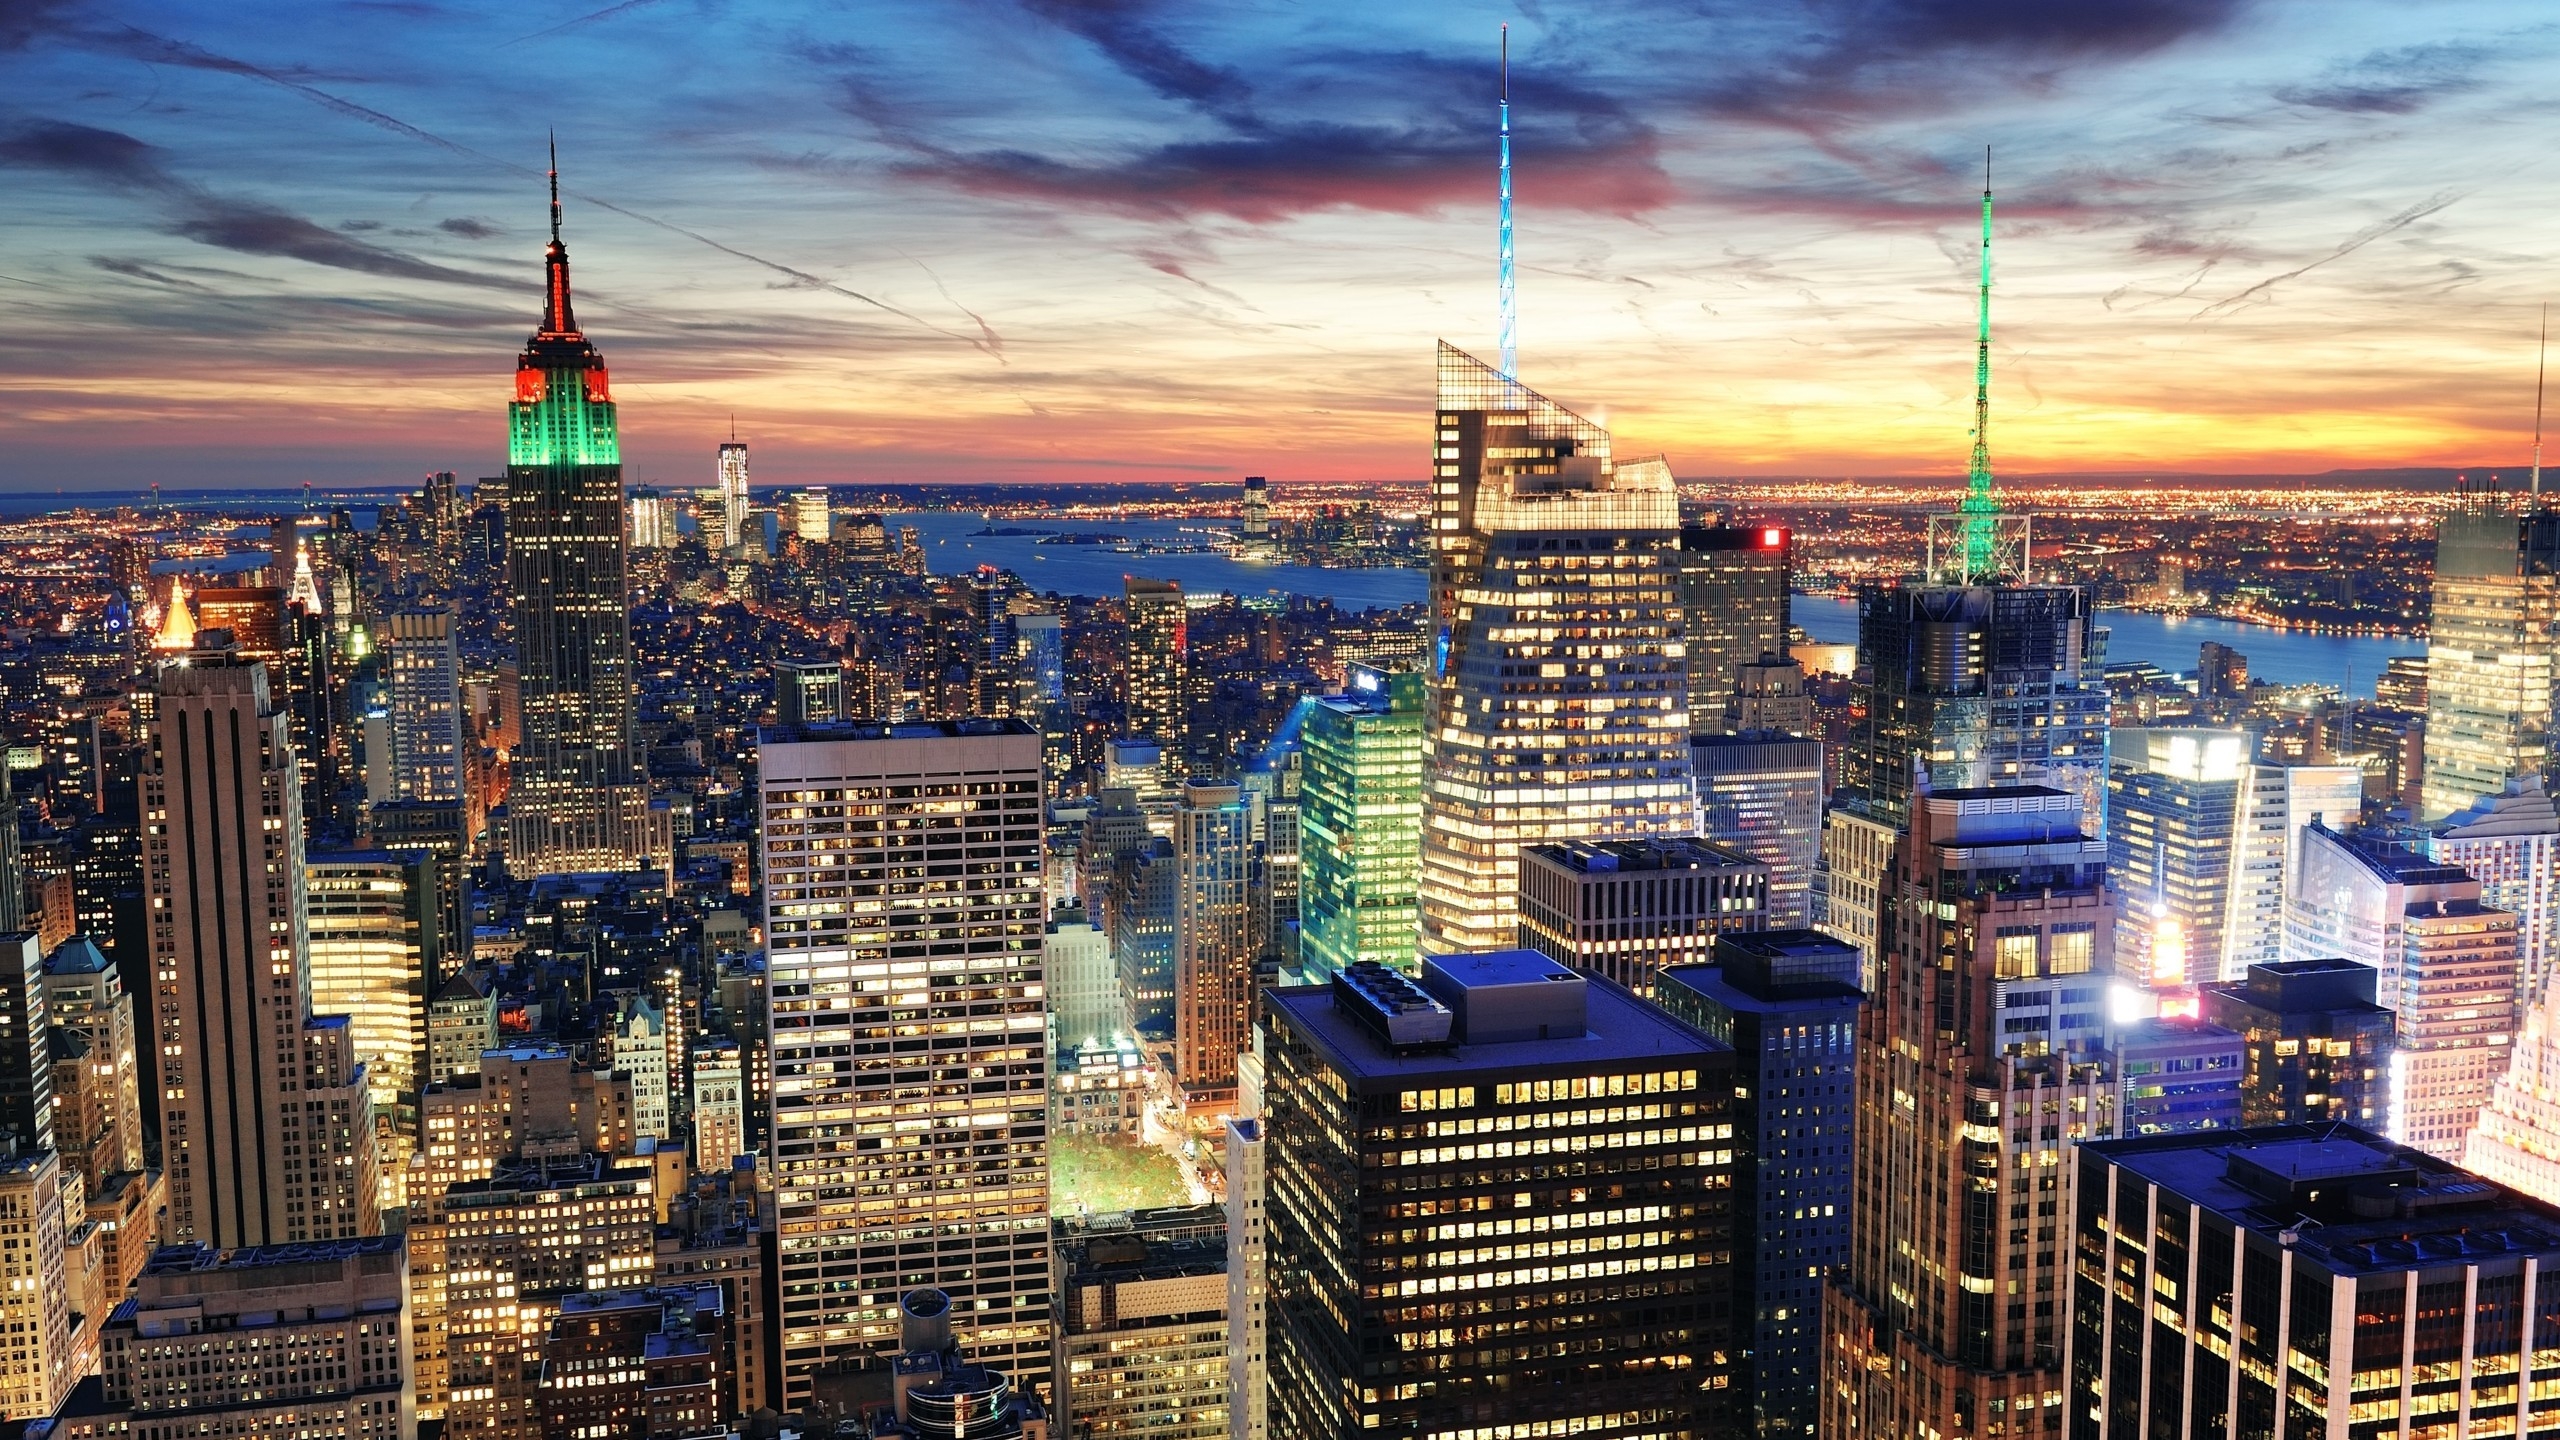 New York Night View for 2560x1440 HDTV resolution